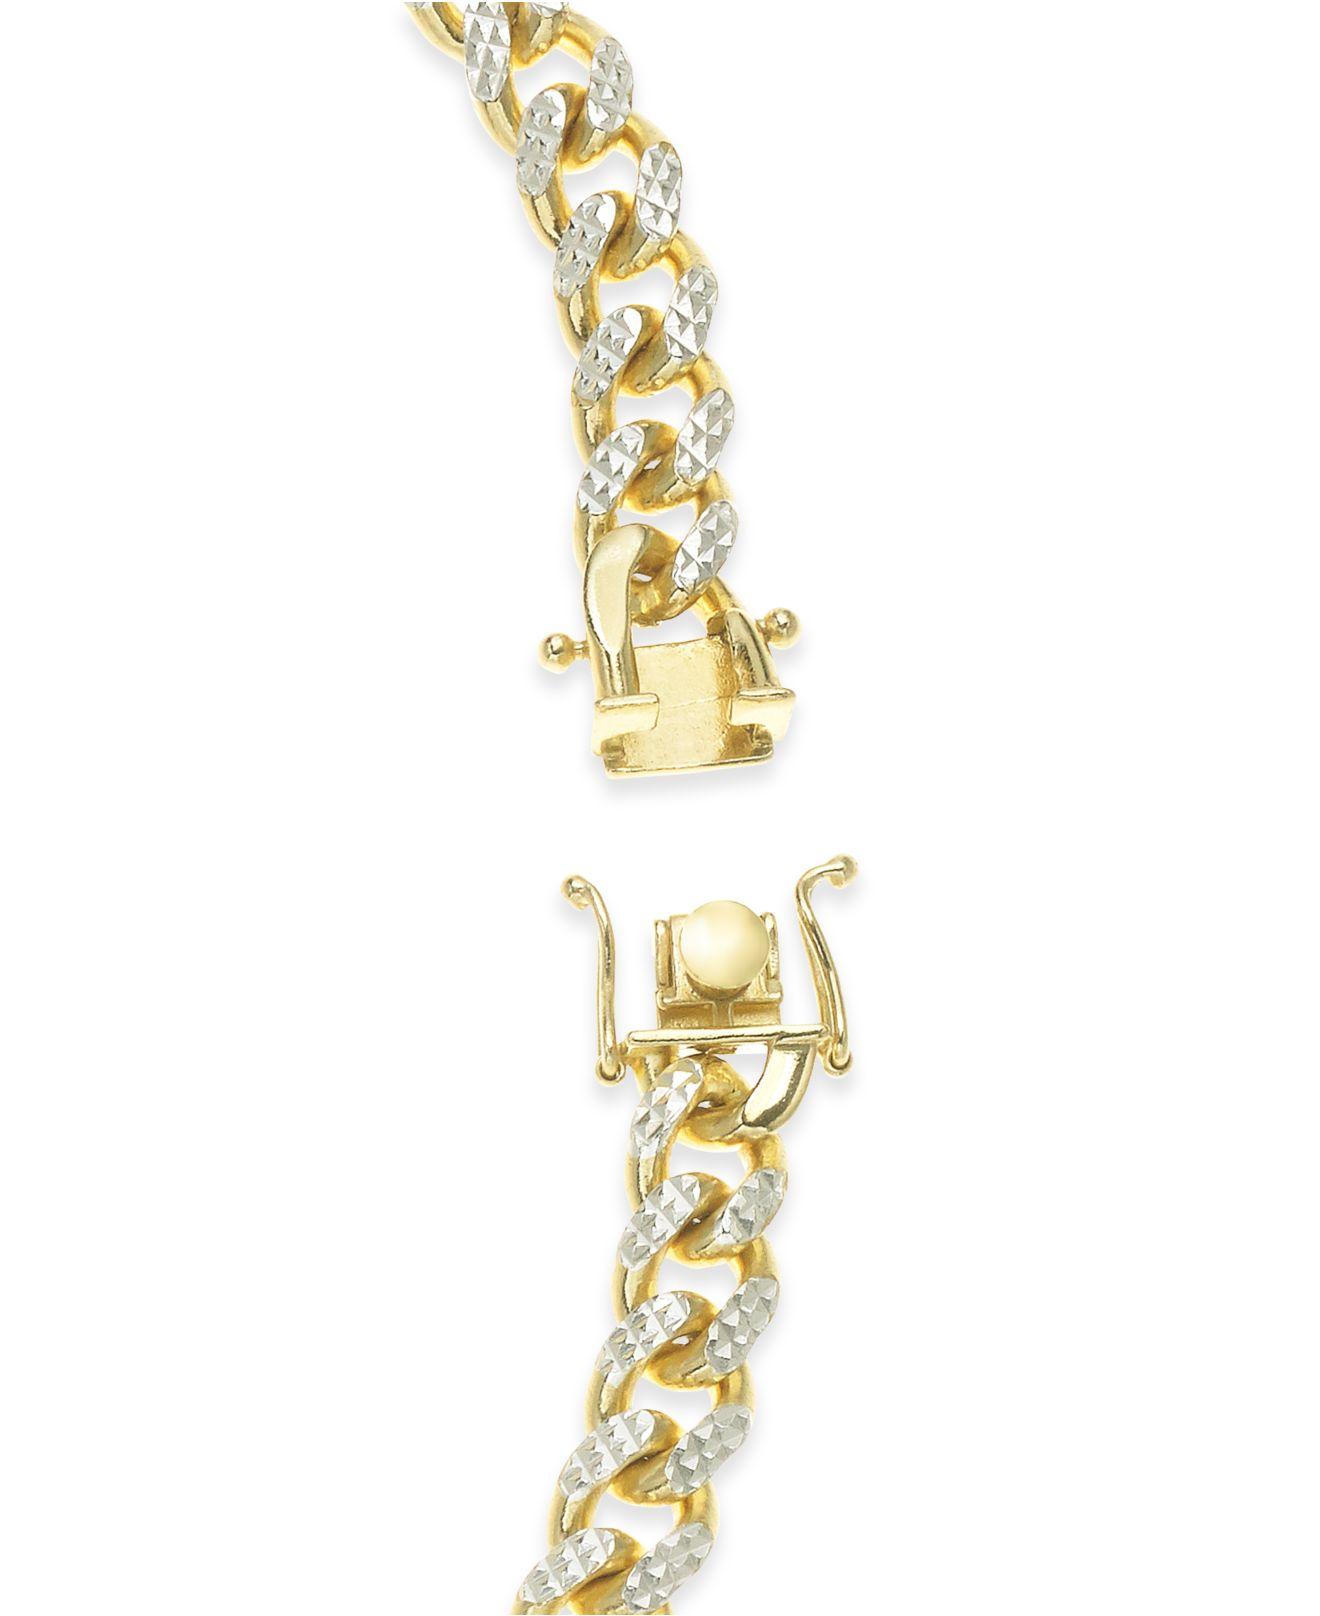 Macy's Men's Sterling Silver Necklace, 24 5-1/2mm Chain - Multi